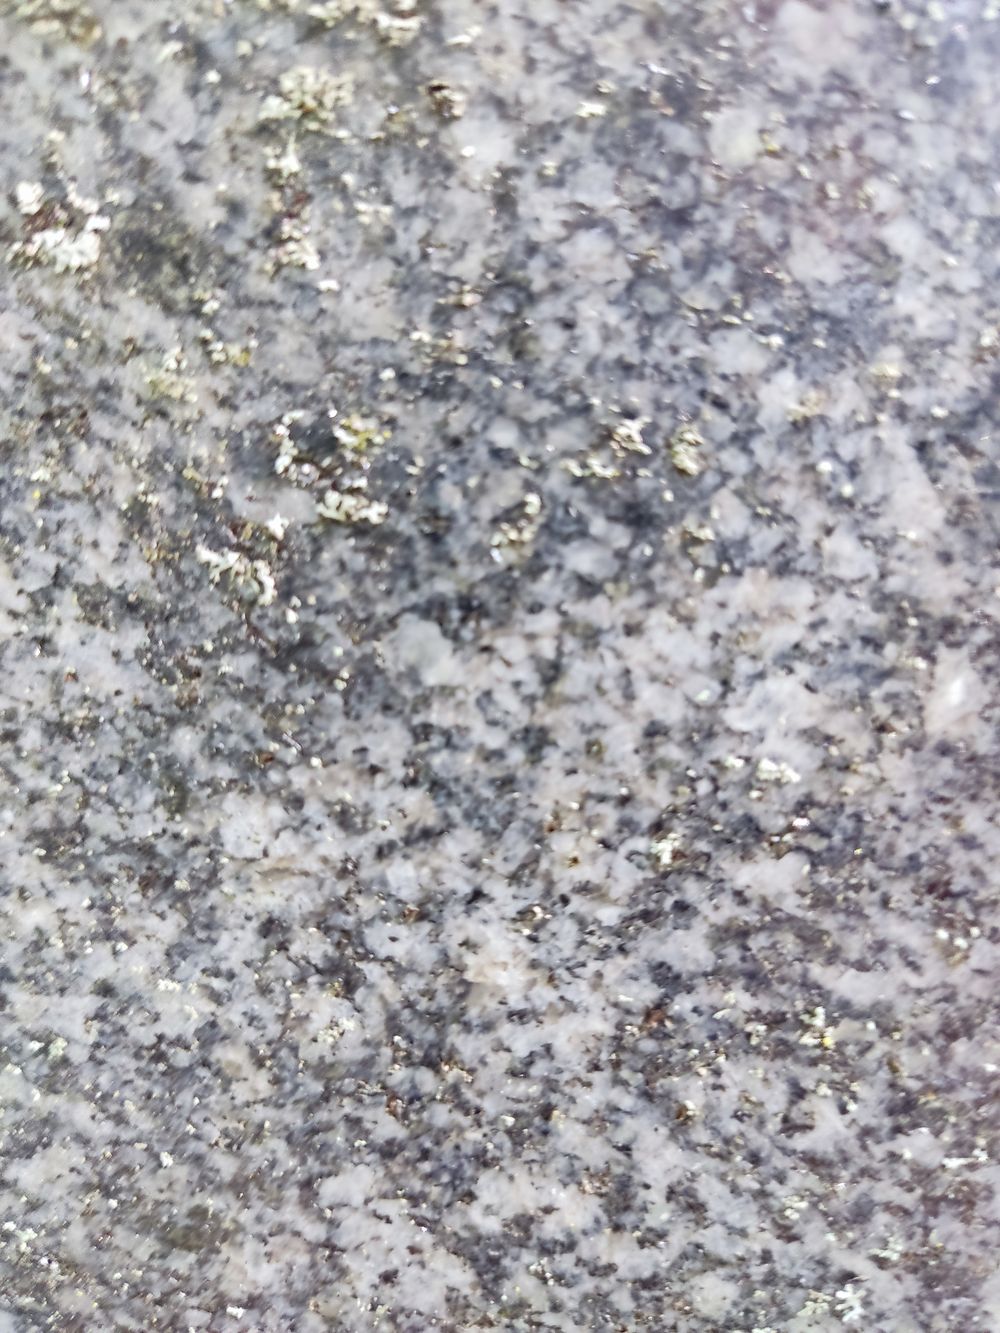 Material (granite) used for the gravestone of Marek Skirgajlo at St. Michael's Cemetery in Riga, as of 2022